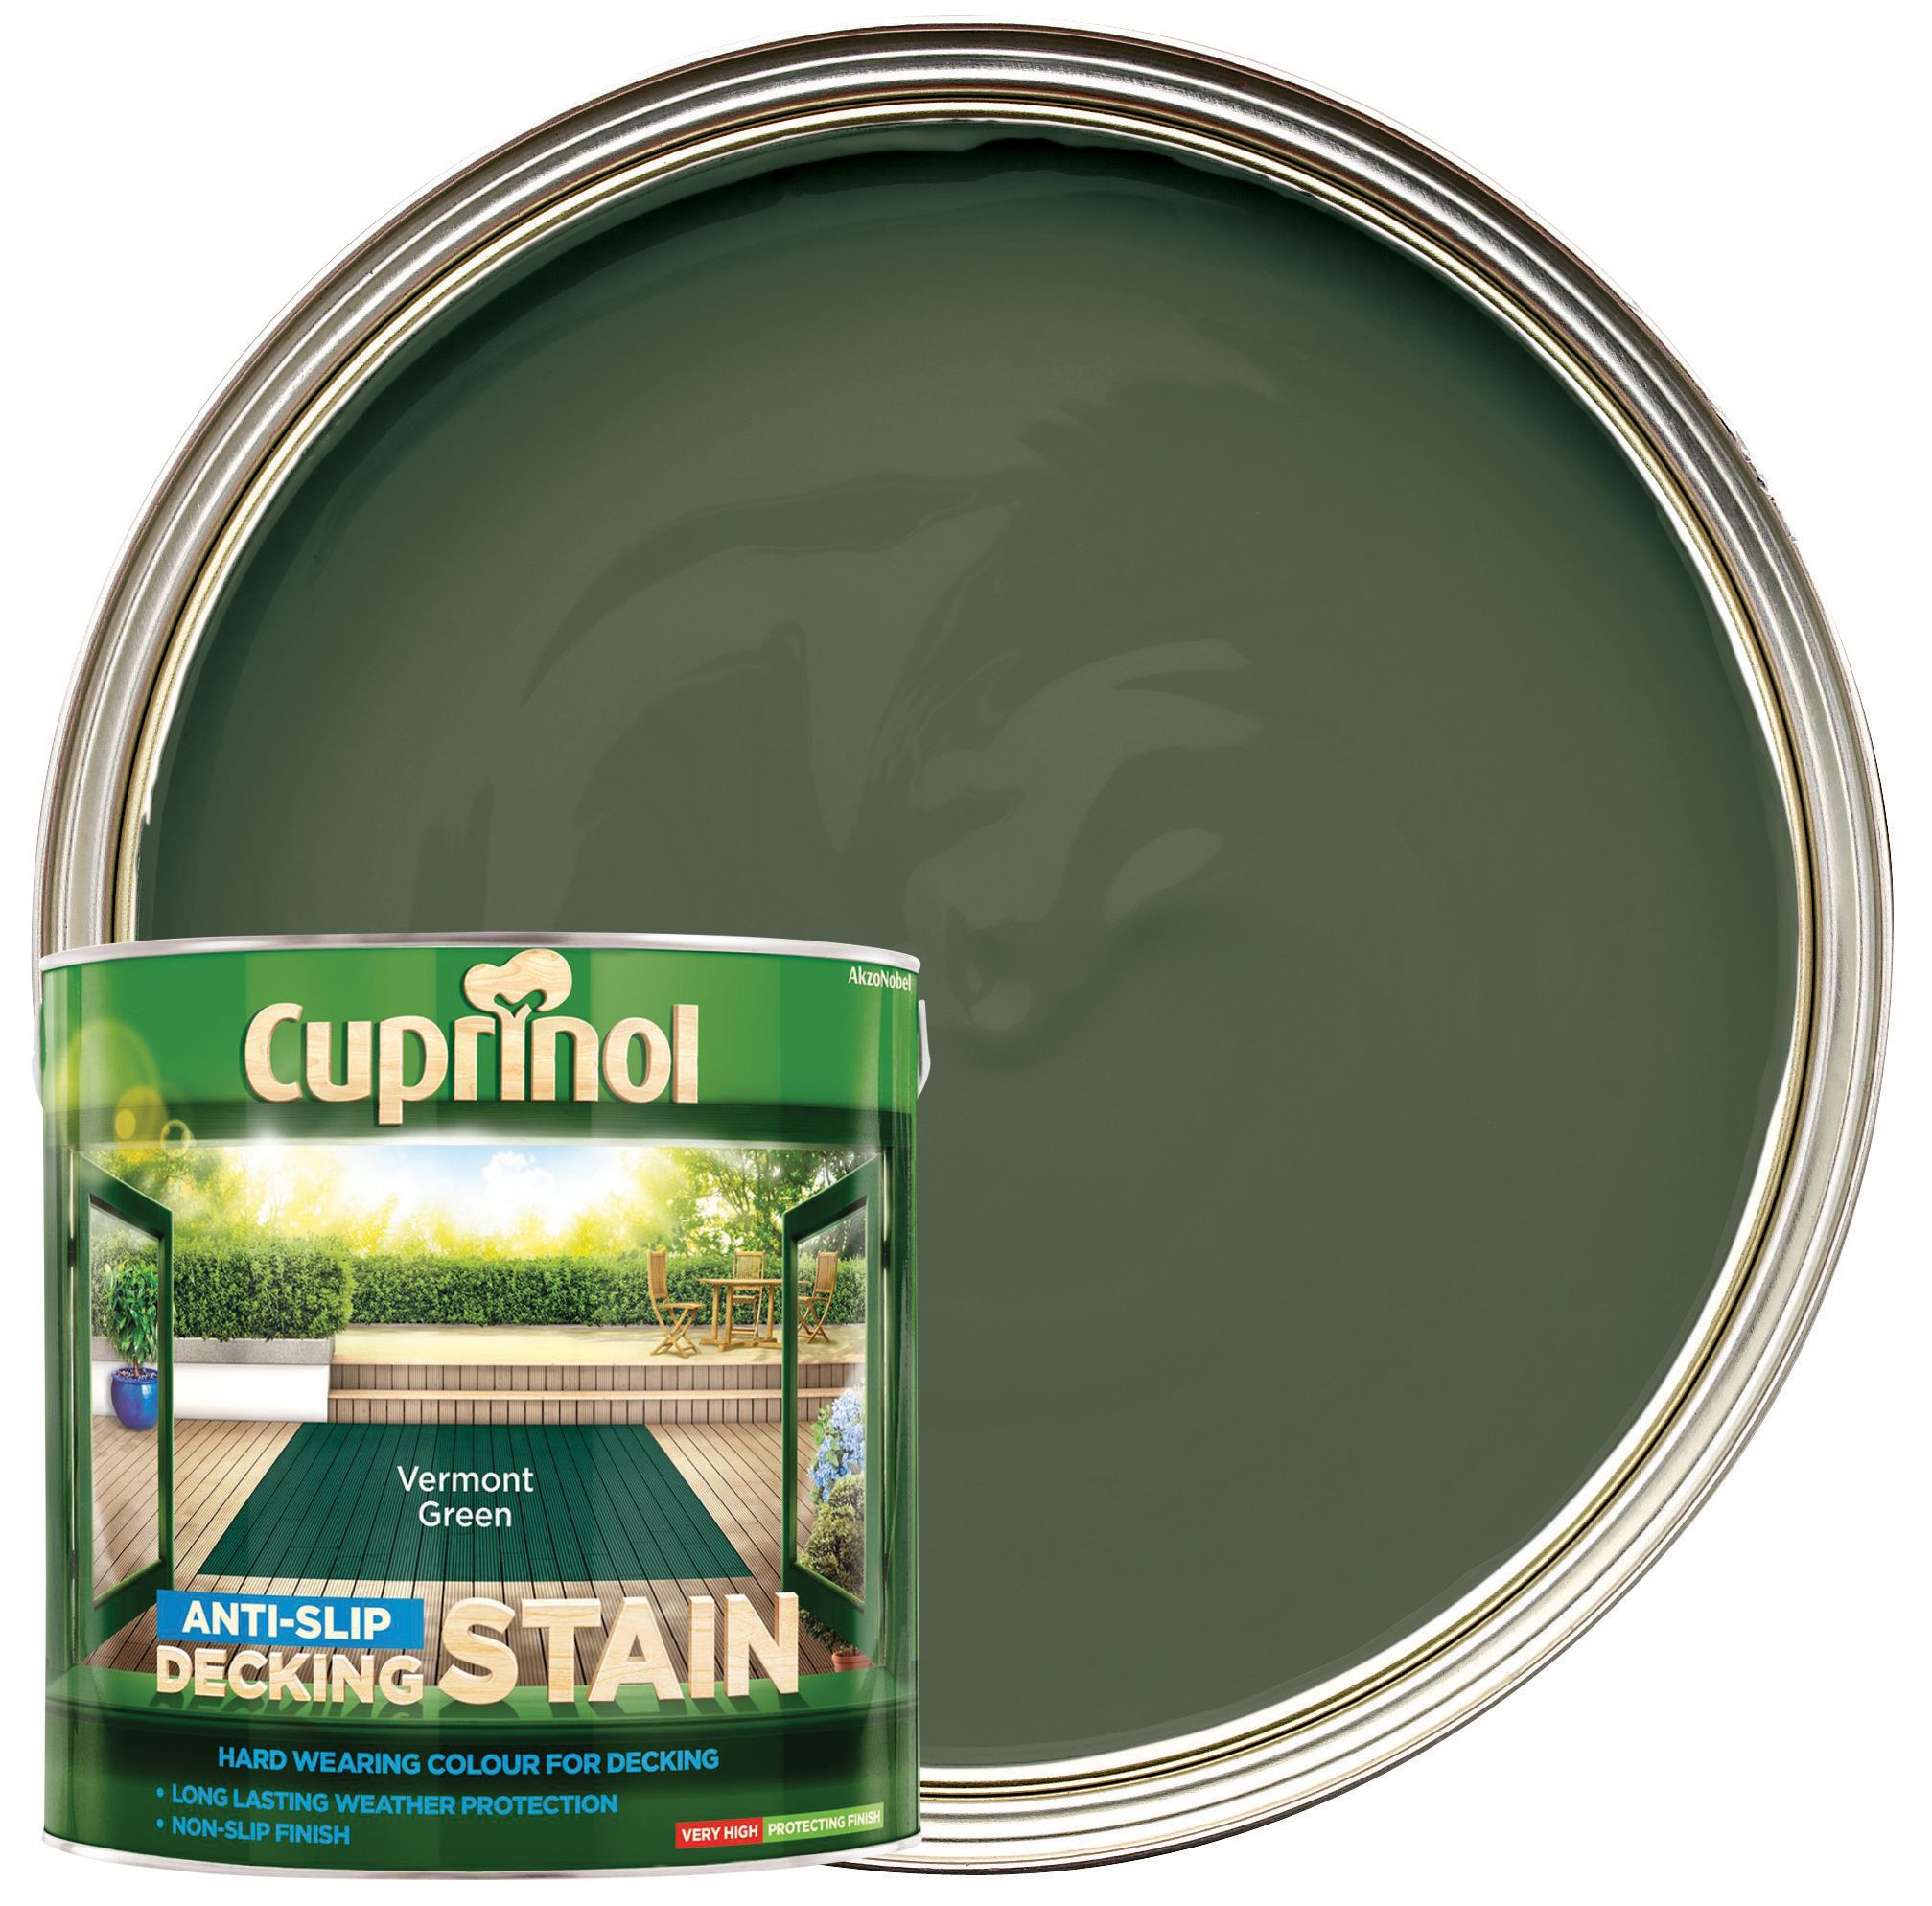 Image of Cuprinol Anti-Slip Decking Stain - Vermont Green 2.5L